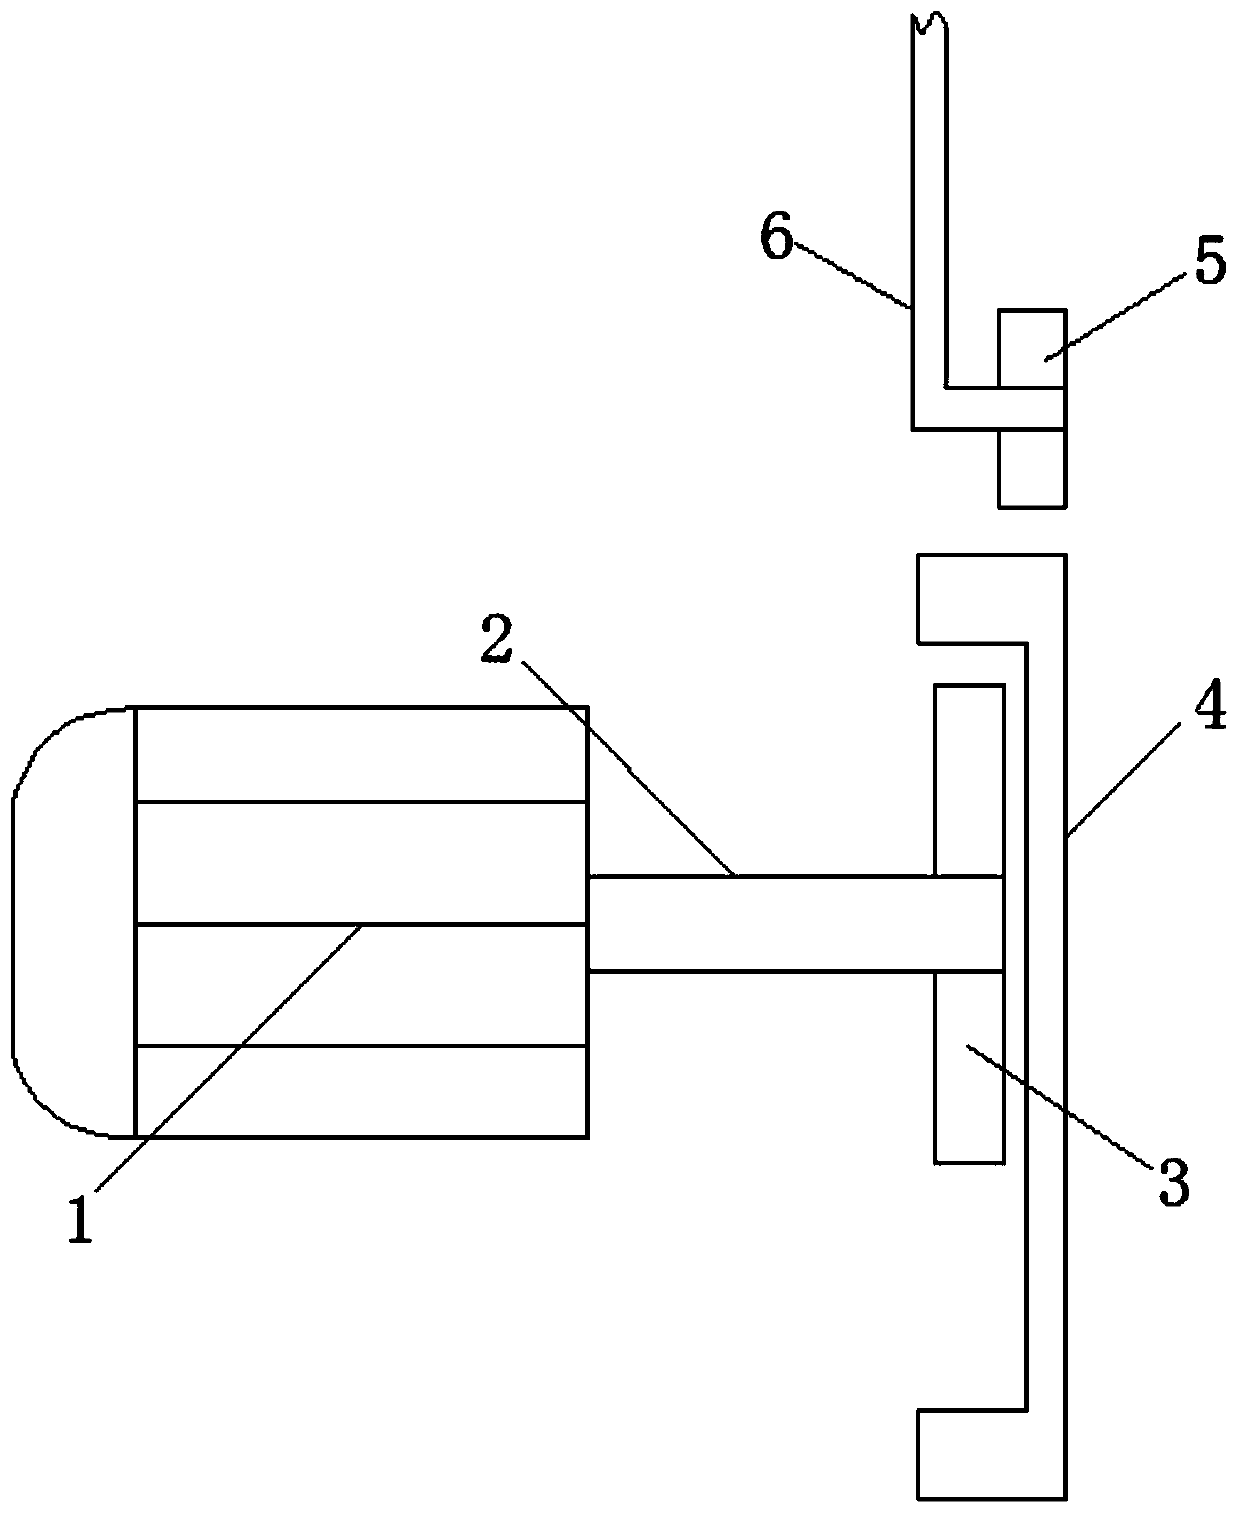 Liquid nitrogen refrigeration-based heat dissipation device for computer information technology